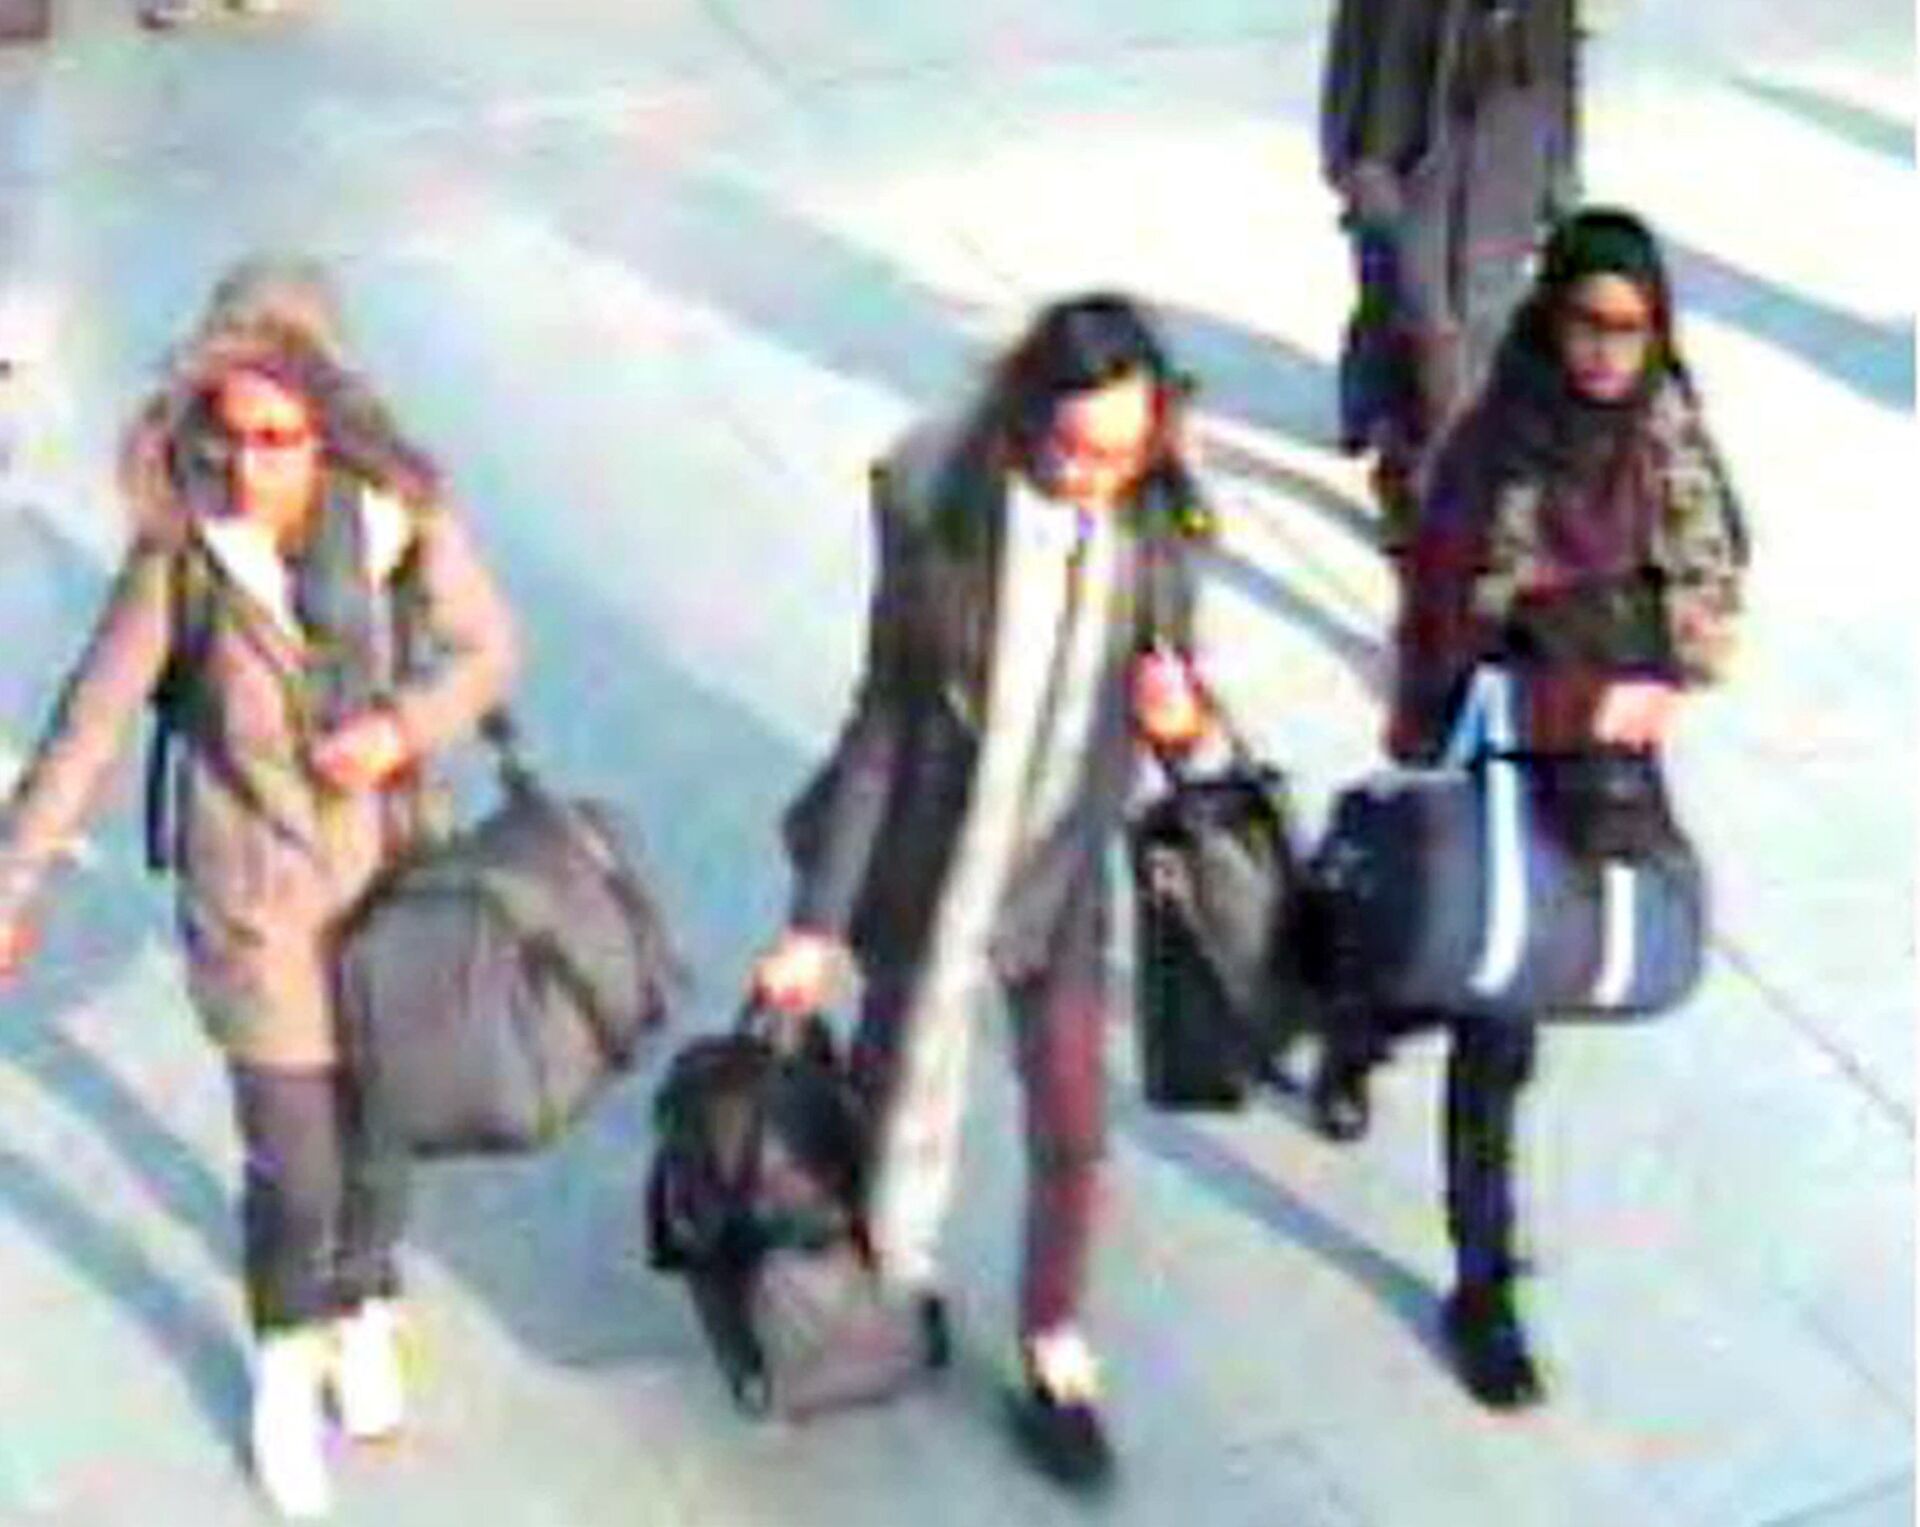  Amira Abase, left, Kadiza Sultana, center, and Shamima Begum, walk through Gatwick airport, south of London, before catching their flight to Turkey on Tuesday Feb 17, 2015 - Sputnik International, 1920, 12.06.2022